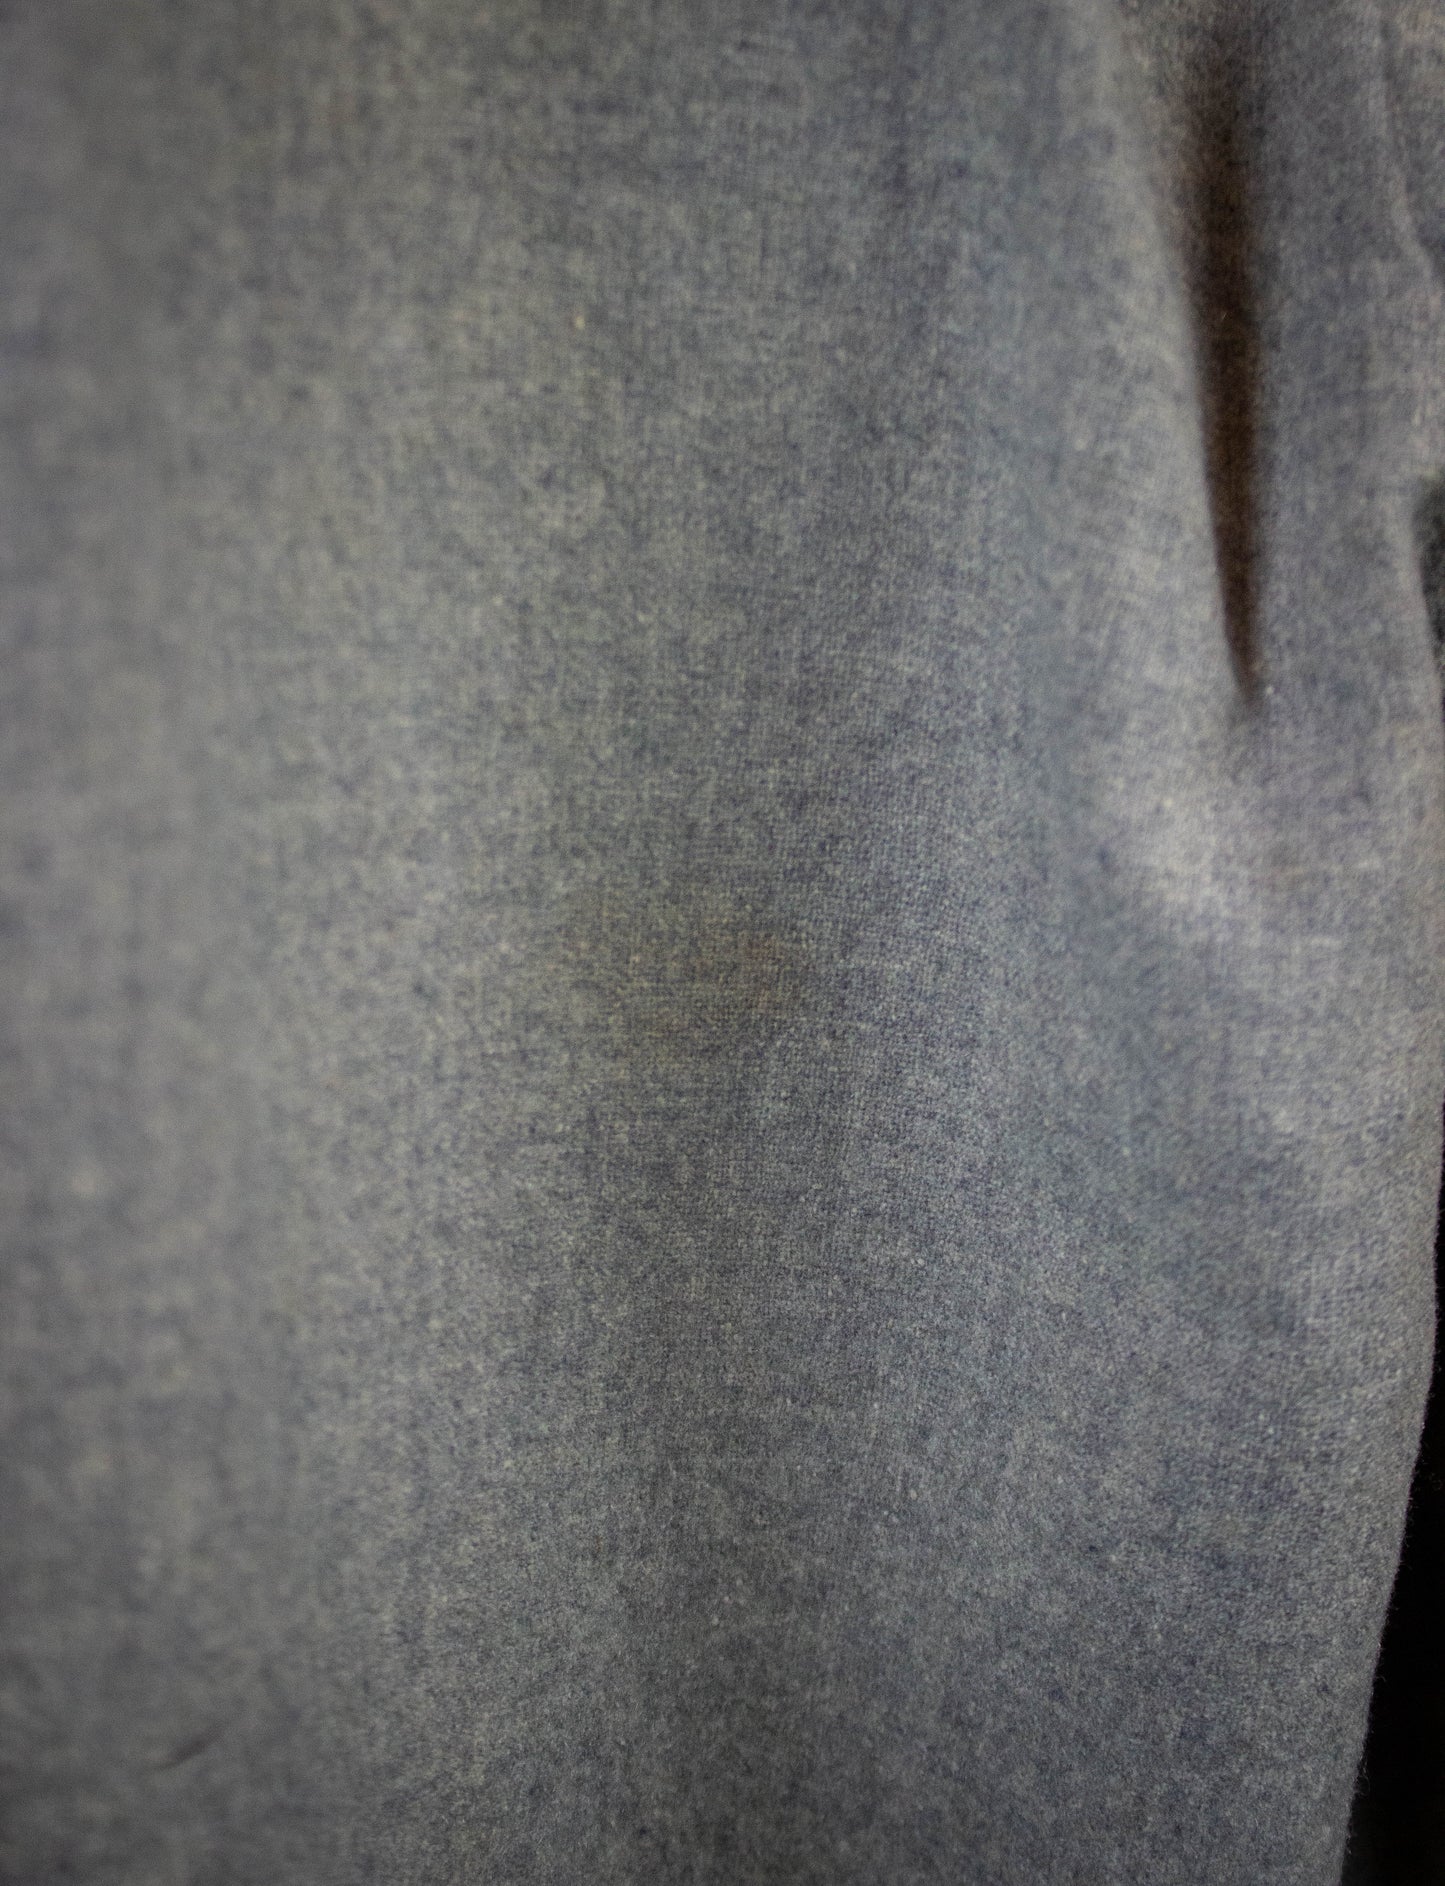 Vintage Pullover Workwear Shirt 30s Gray Medium